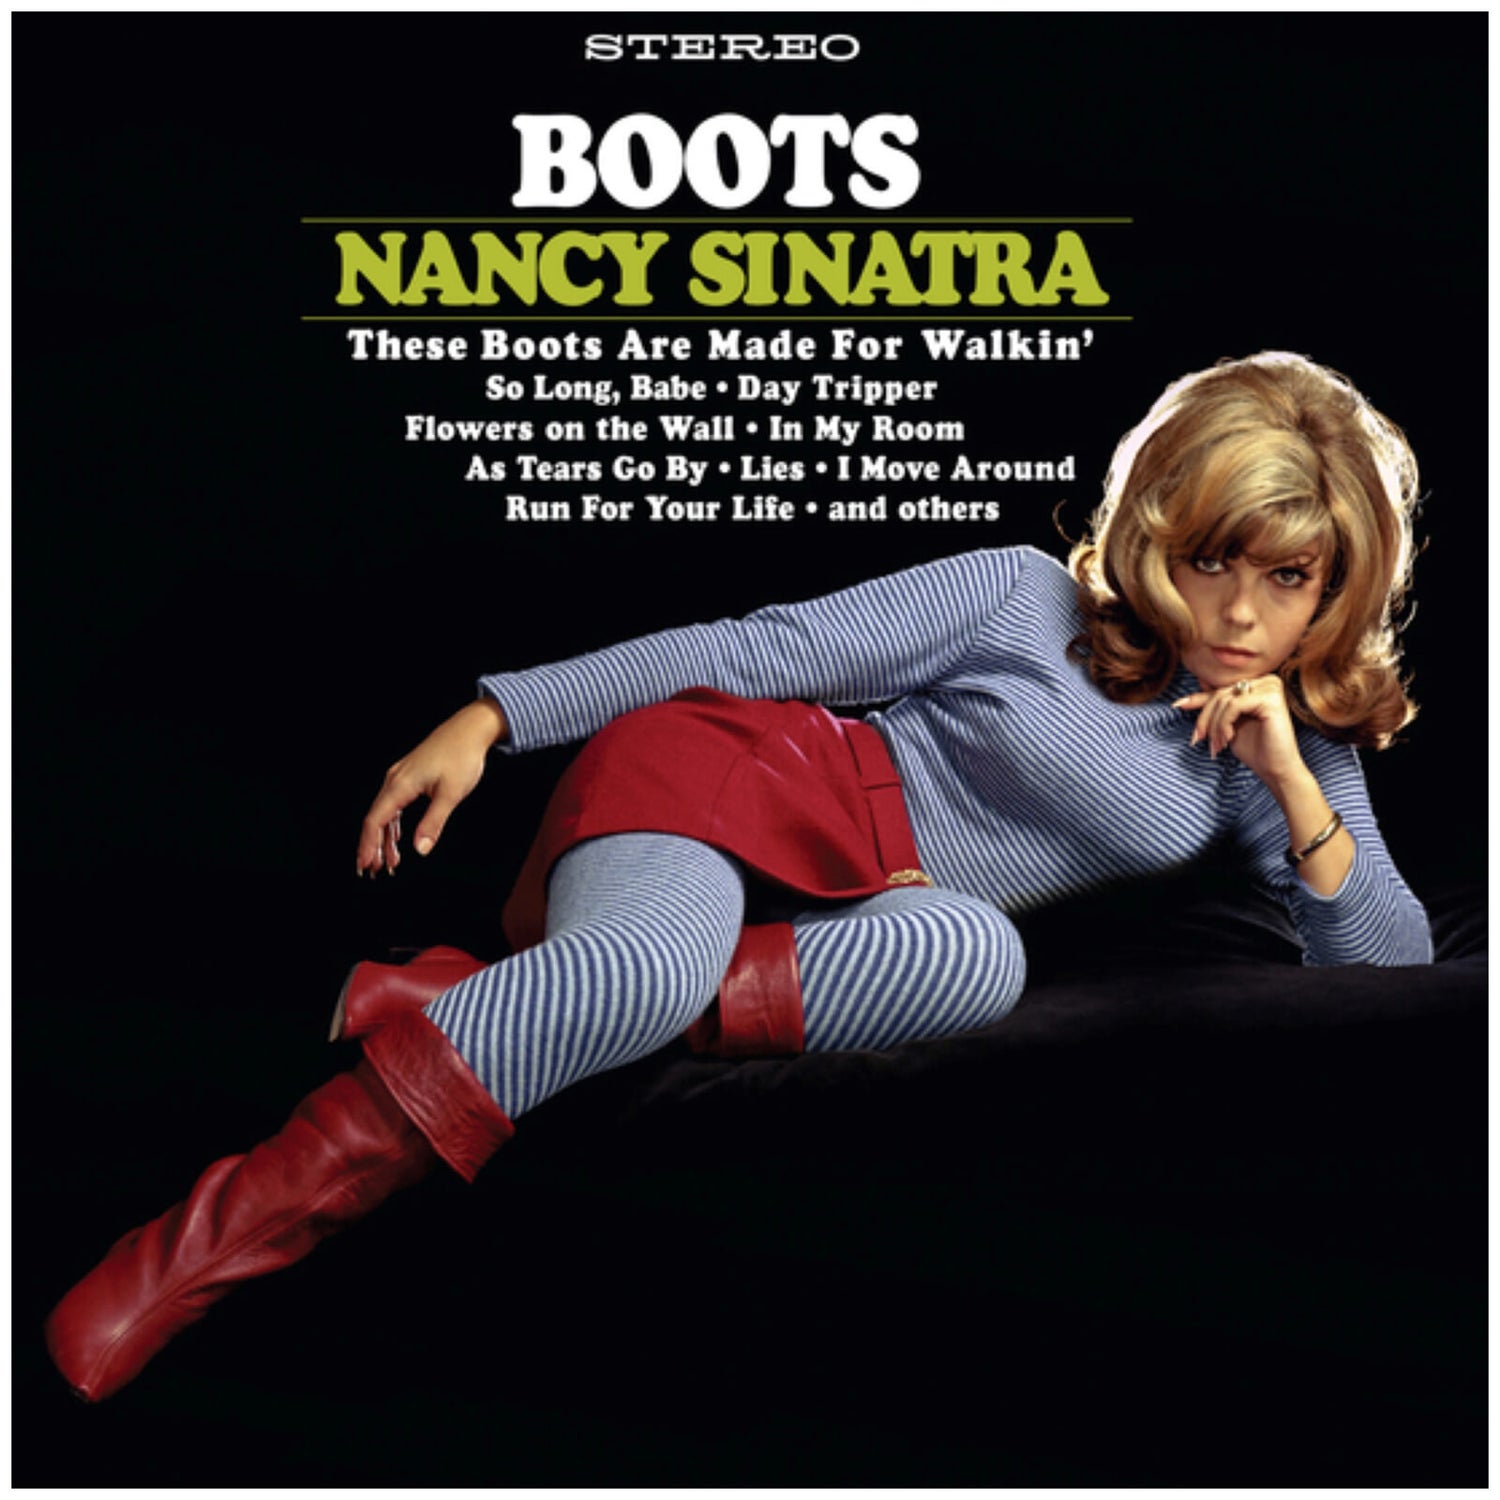 Nancy Sinatra - Boots Vinyl ("So Long, Babe" Blue Swirl)